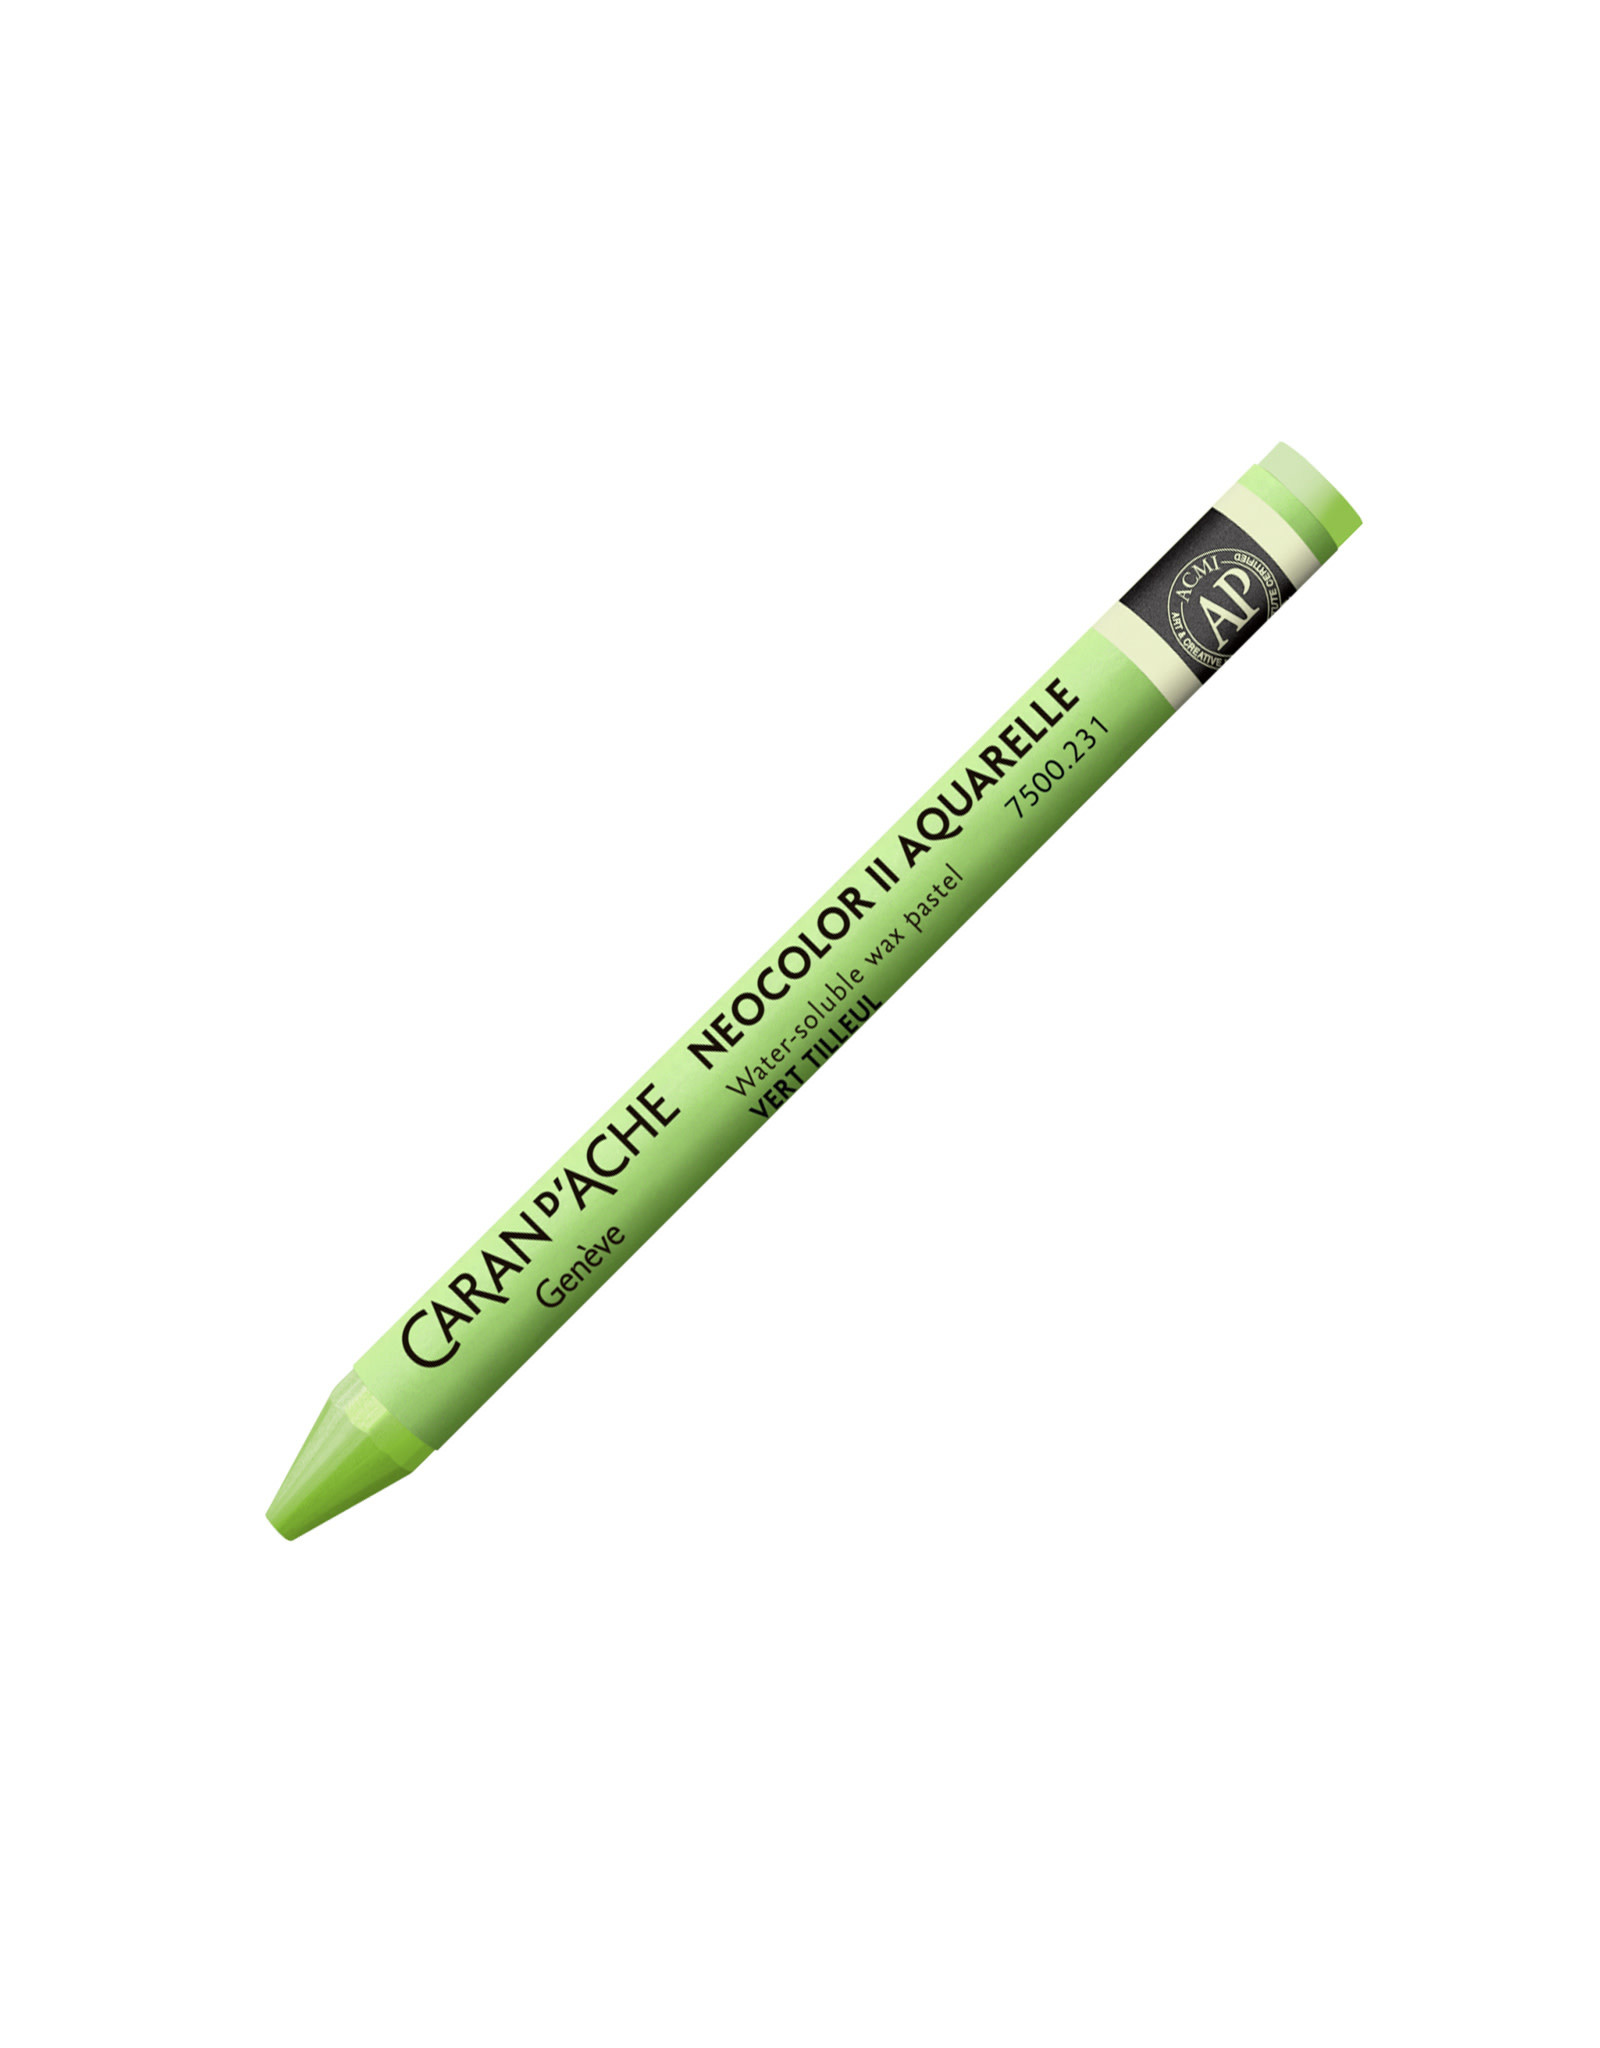 Caran d'Ache Neocolor II Crayons Lime Green